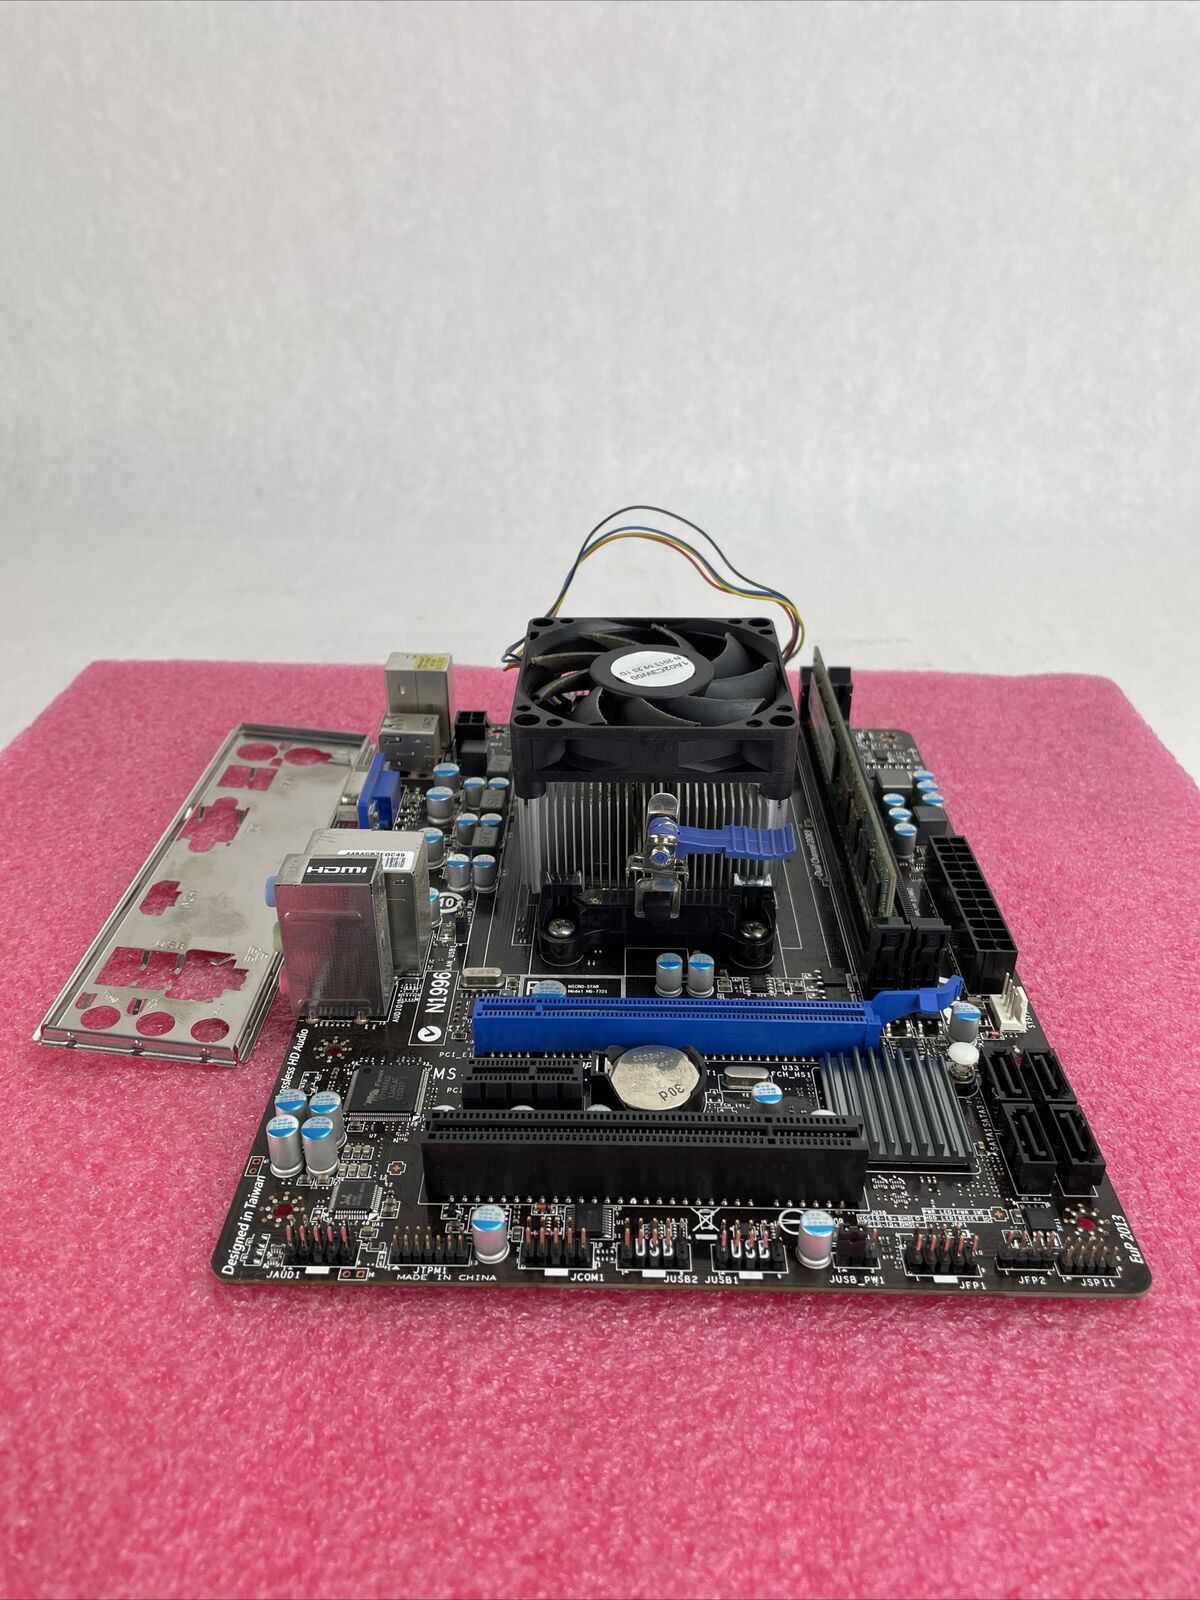 MSI 7721 Motherboard AMD A8-5600K 3.6GHz 4GB RAM w/Shield